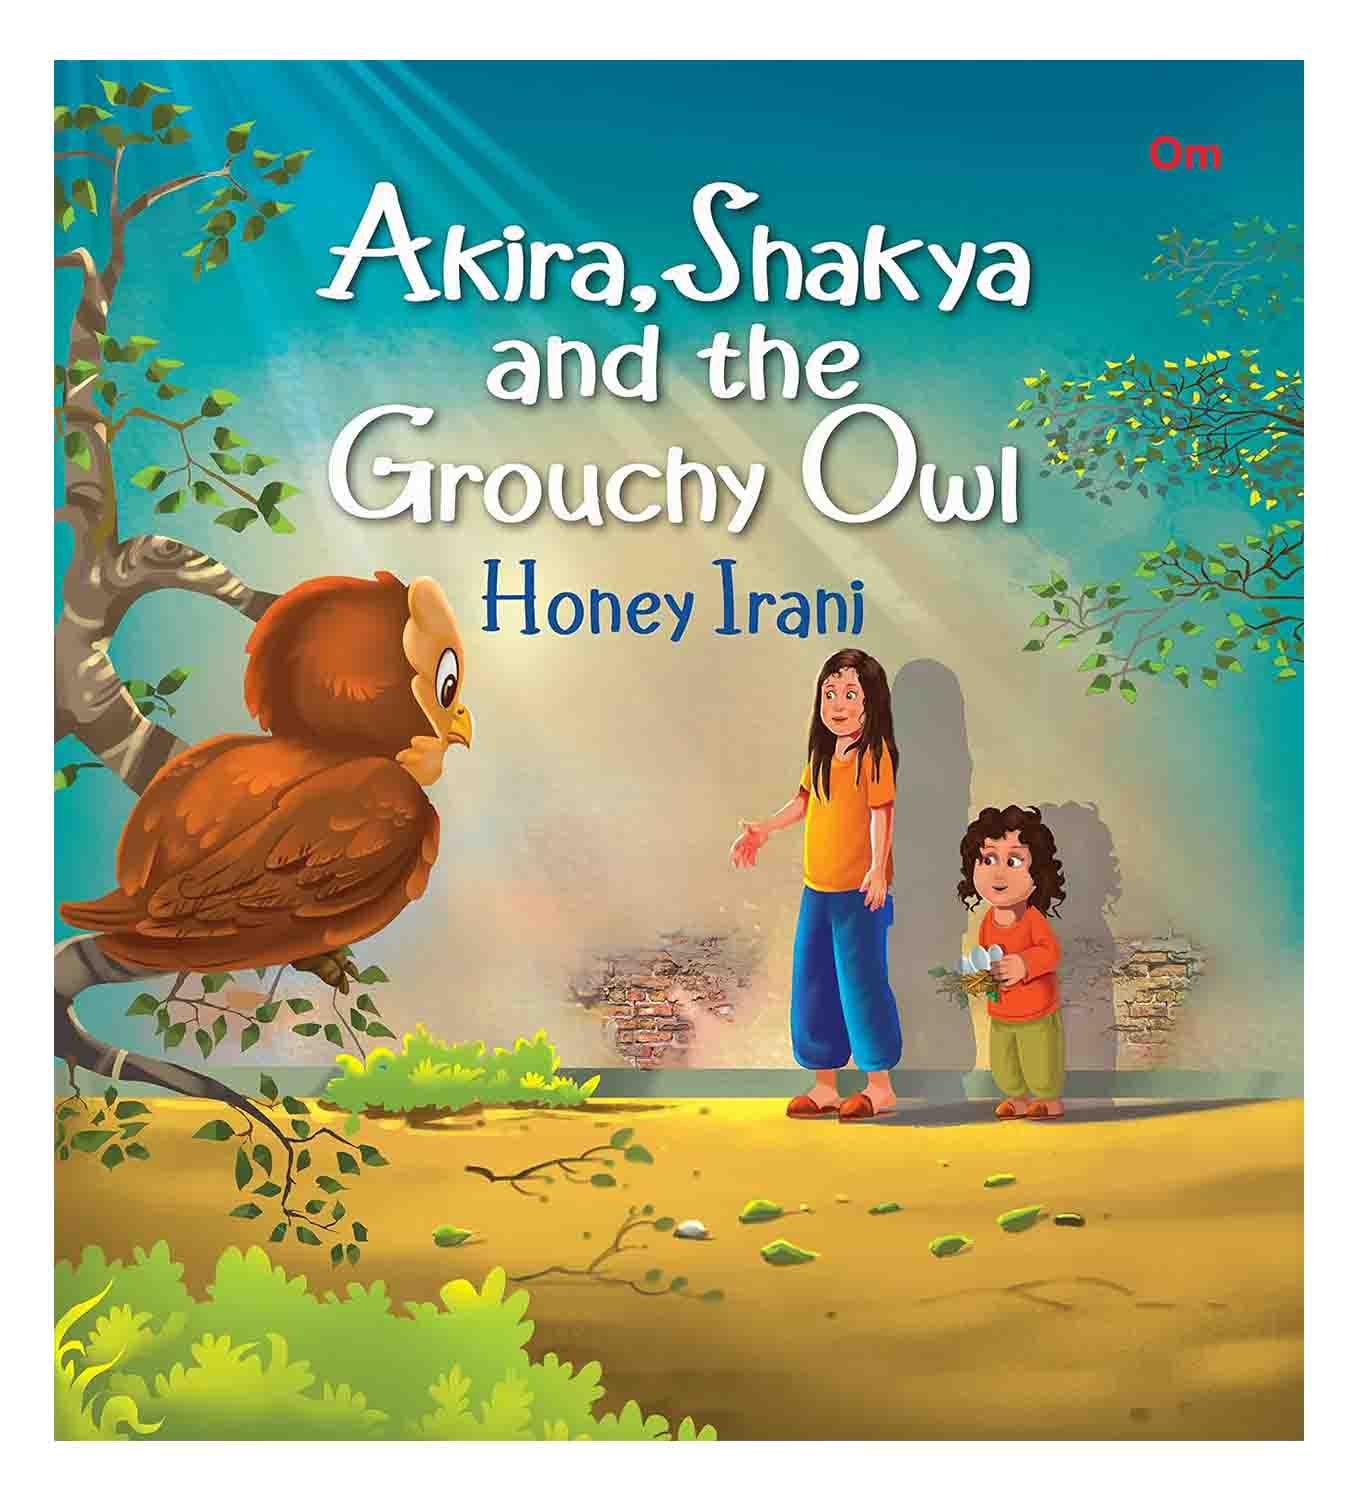 Om Books International Akira, Shakya and the Grouchy Owl - 9789395701068